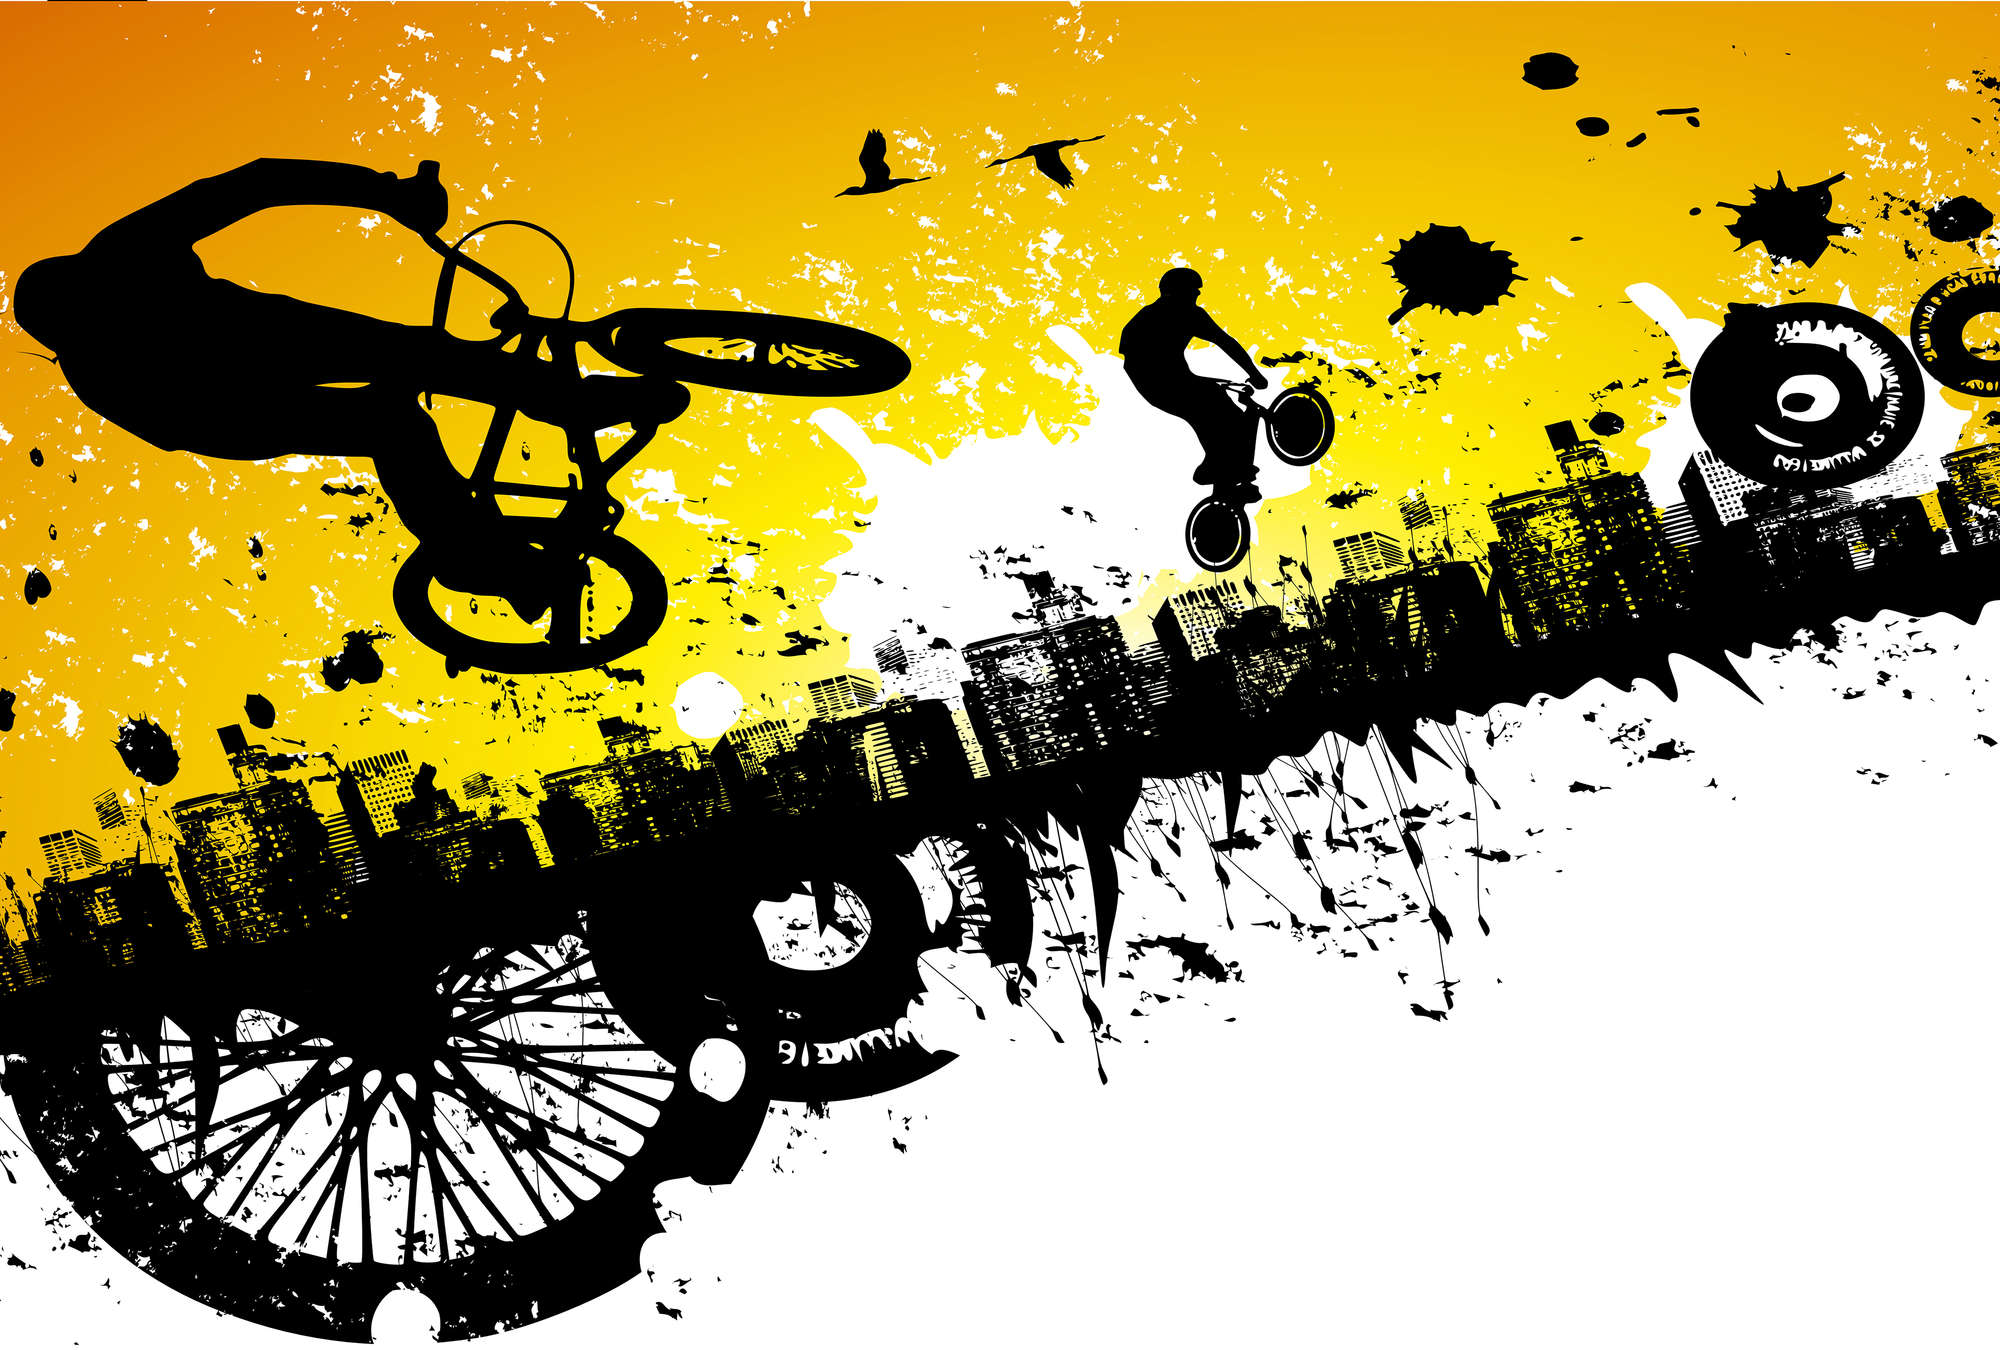             Graffiti Fototapete BMX Fahrer mit Skyline auf Premium Glattvlies
        